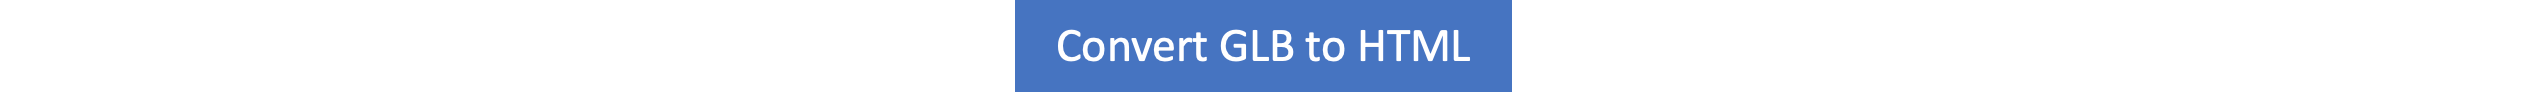 GLB a HTML